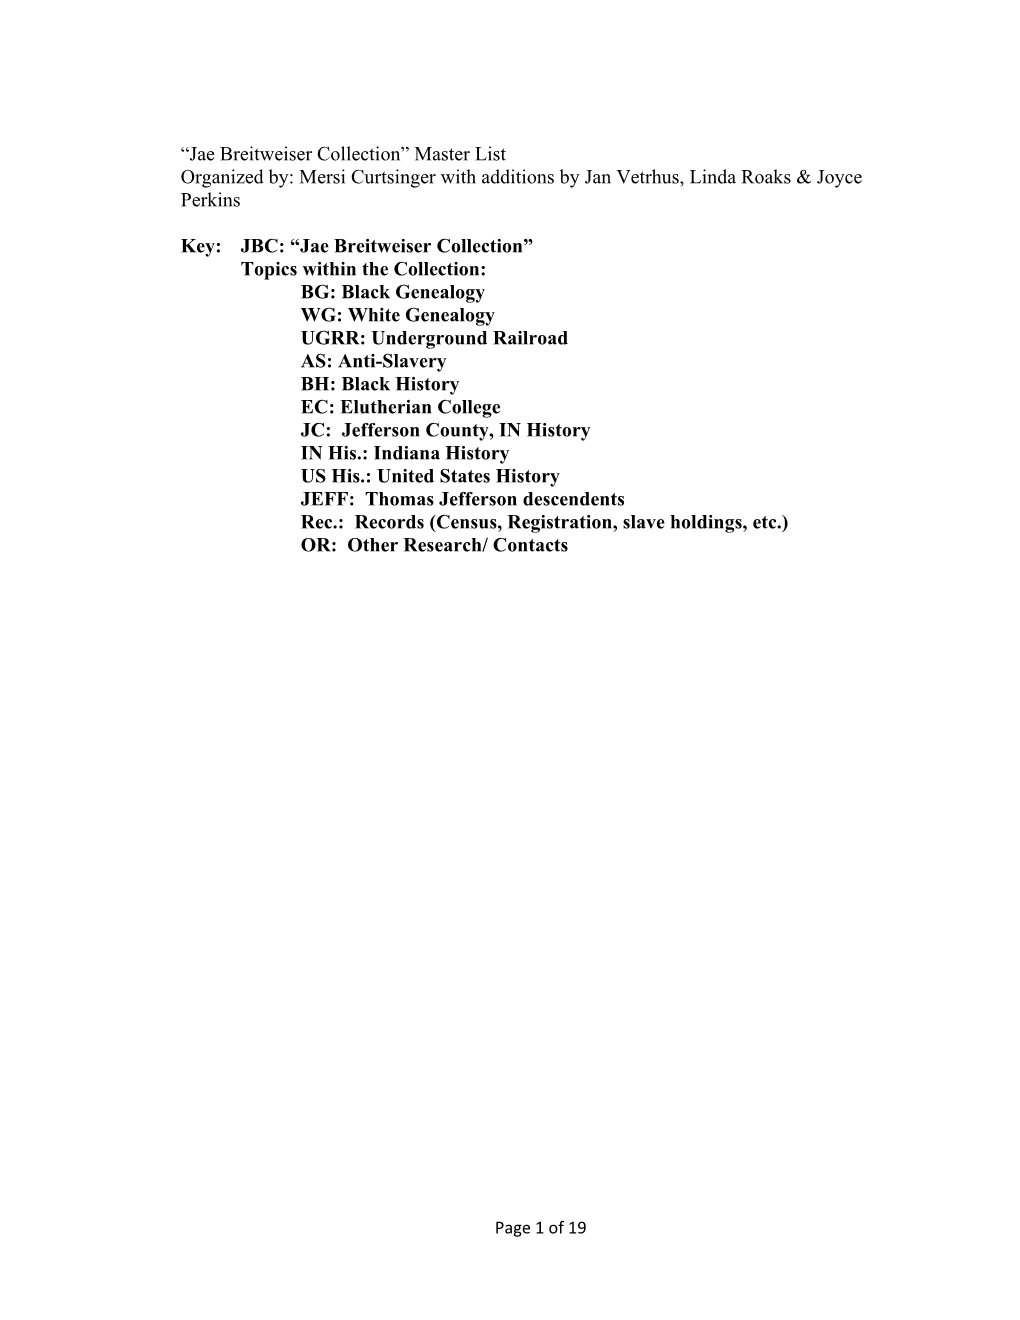 Jae Breitweiser Collection” Master List Organized By: Mersi Curtsinger with Additions by Jan Vetrhus, Linda Roaks & Joyce Perkins